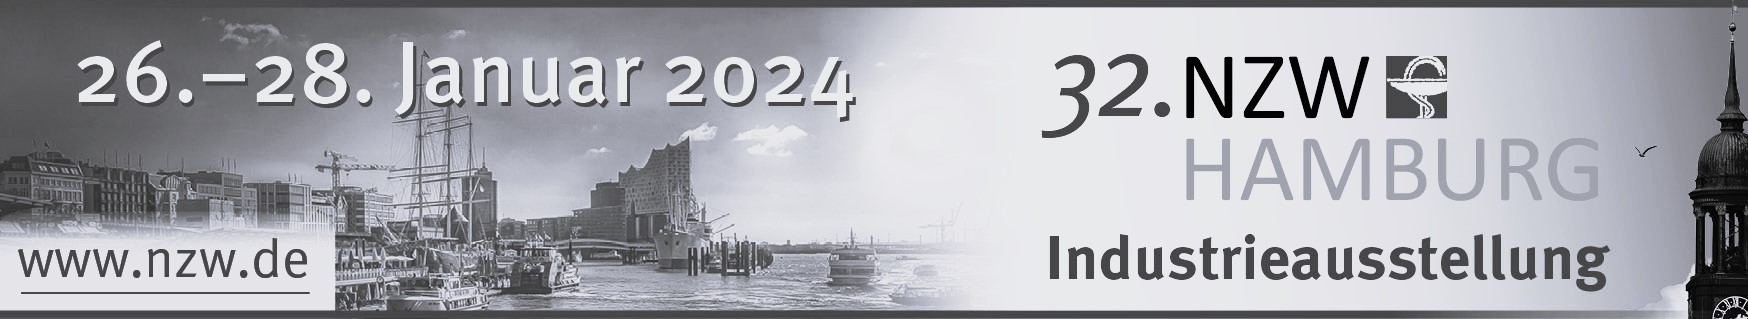 32.NZW Hamburg 2024